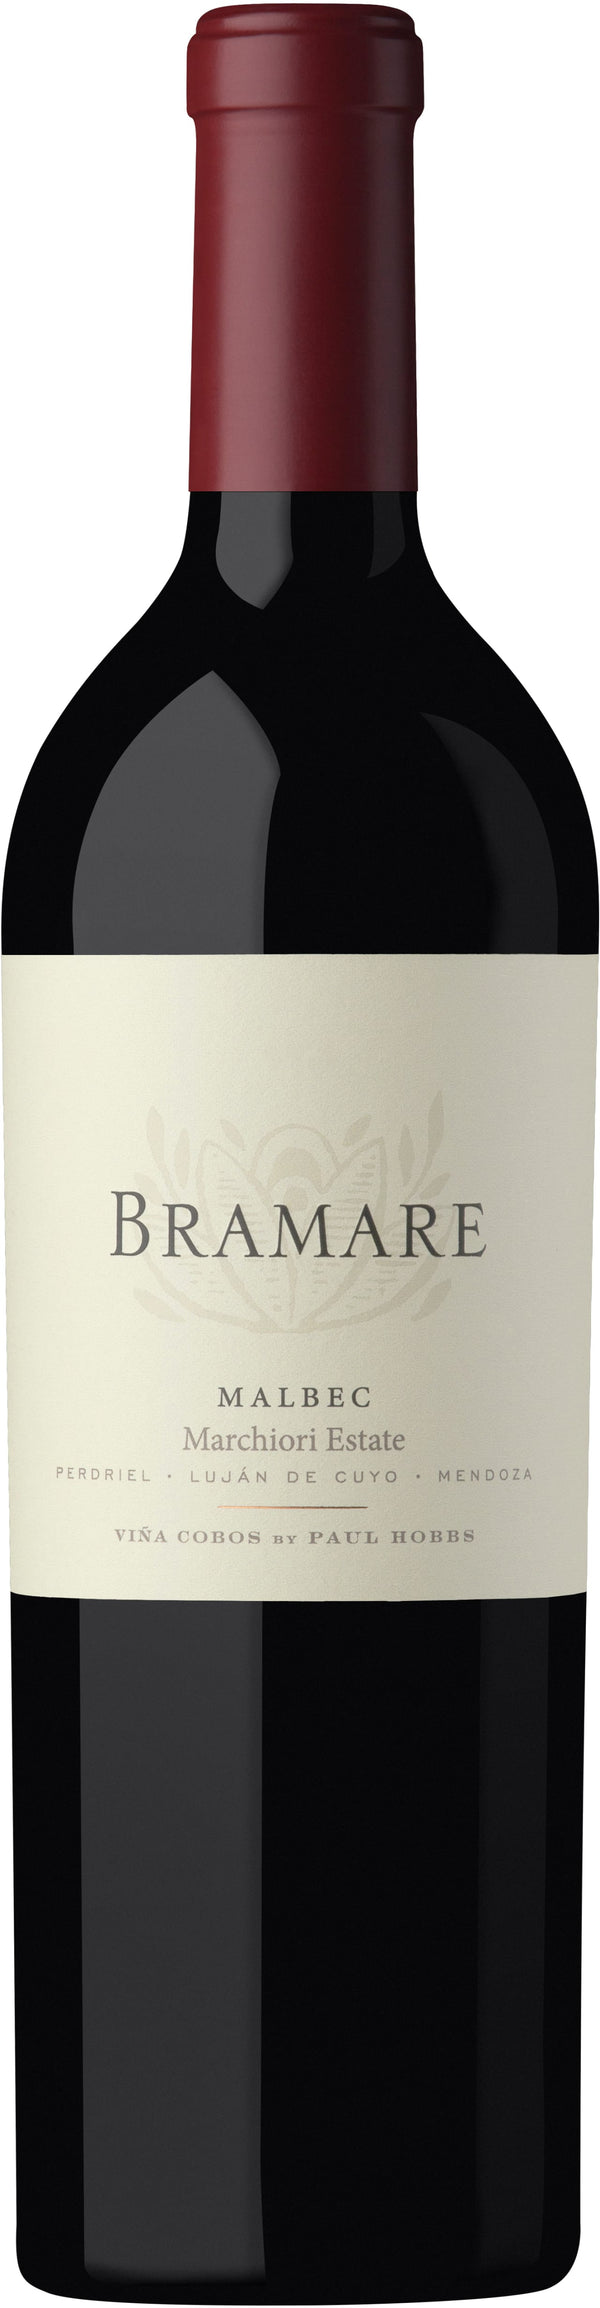 Bramare Malbec, Marchiori Vineyard